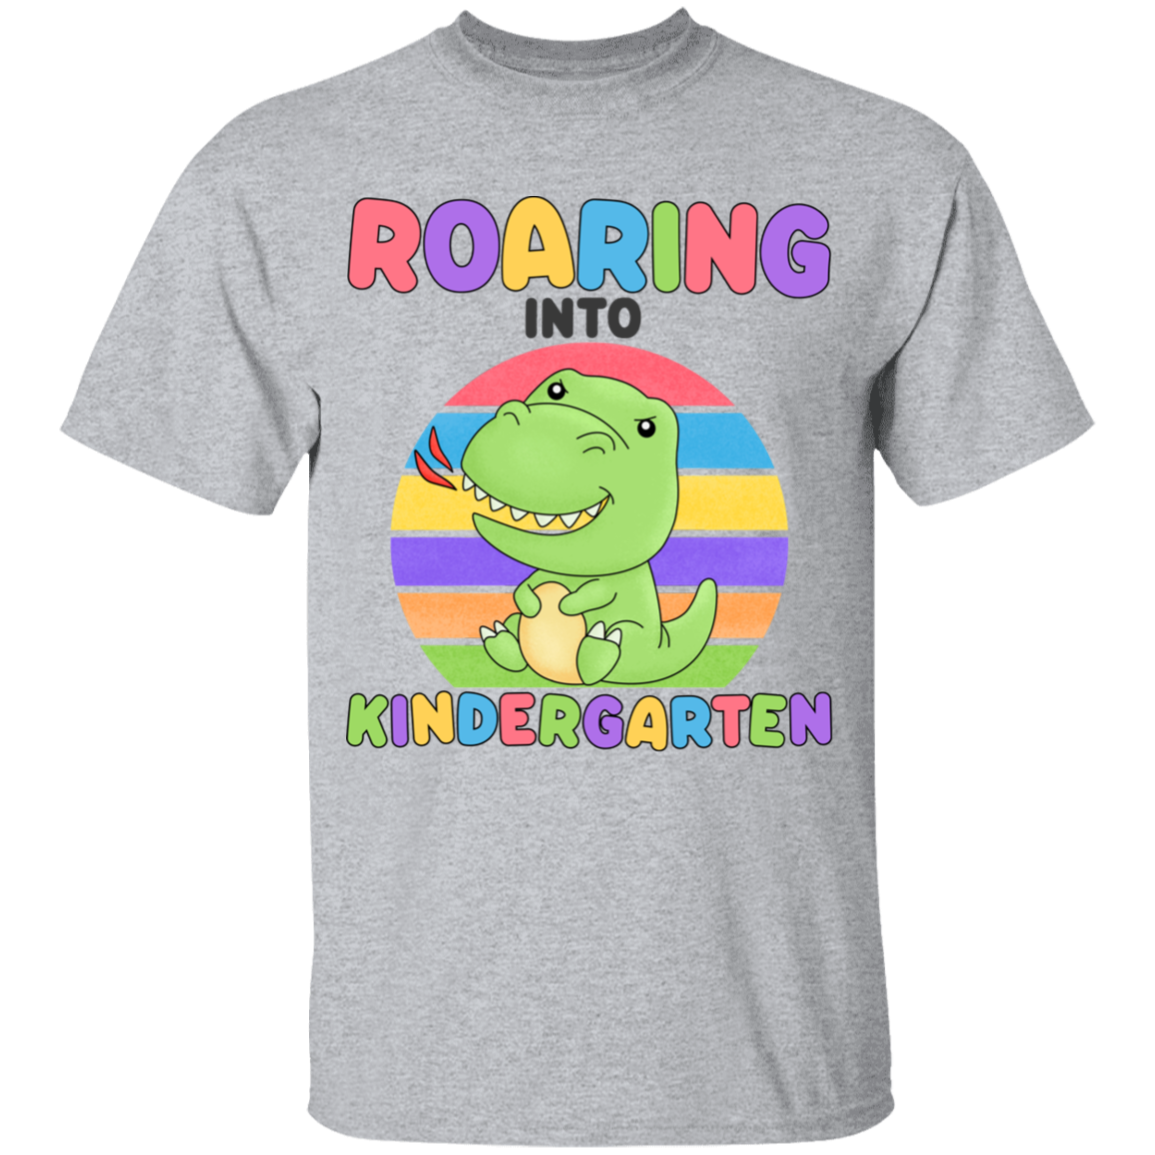 Roaring Into Kindergarten Youth Cotton T-Shirt